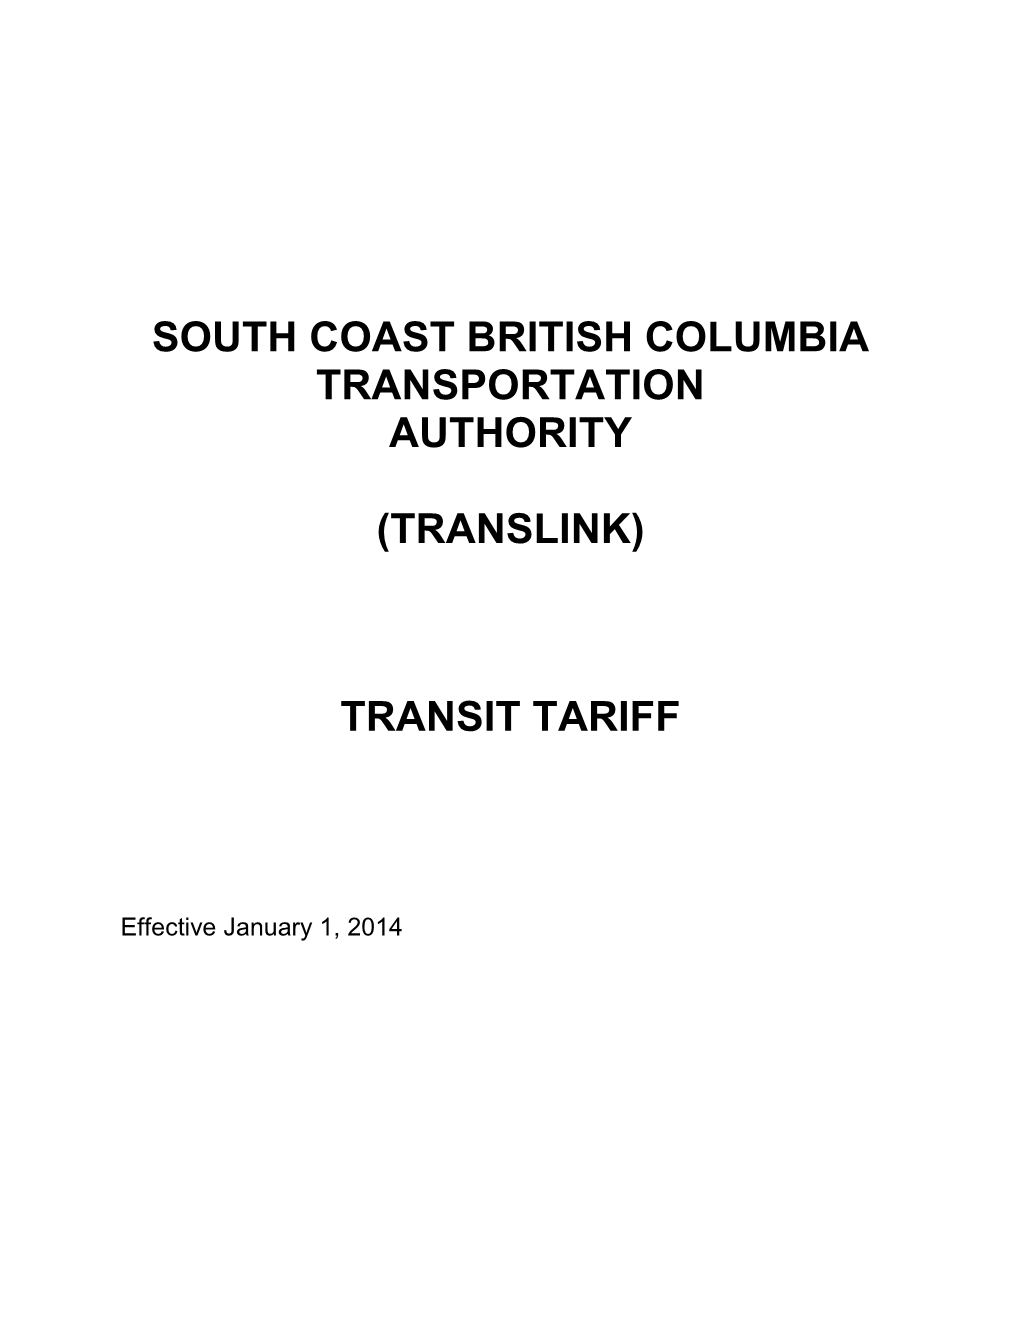 South Coast British Columbia Transportation Authority (Translink)